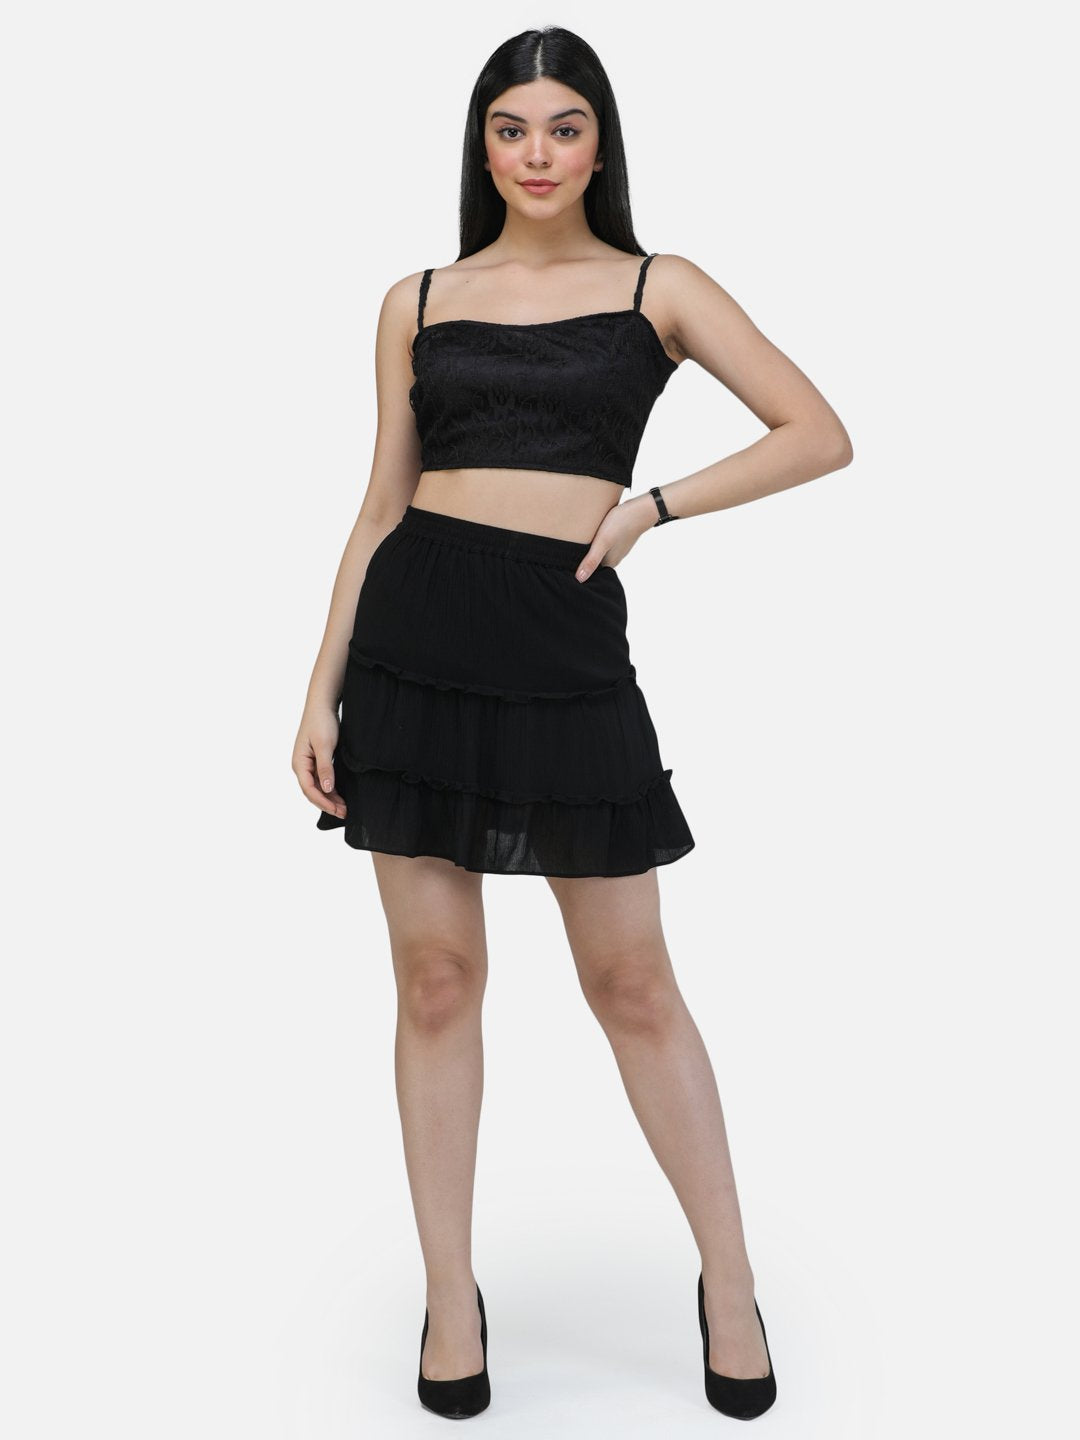 SCORPIUS Black Short skirt